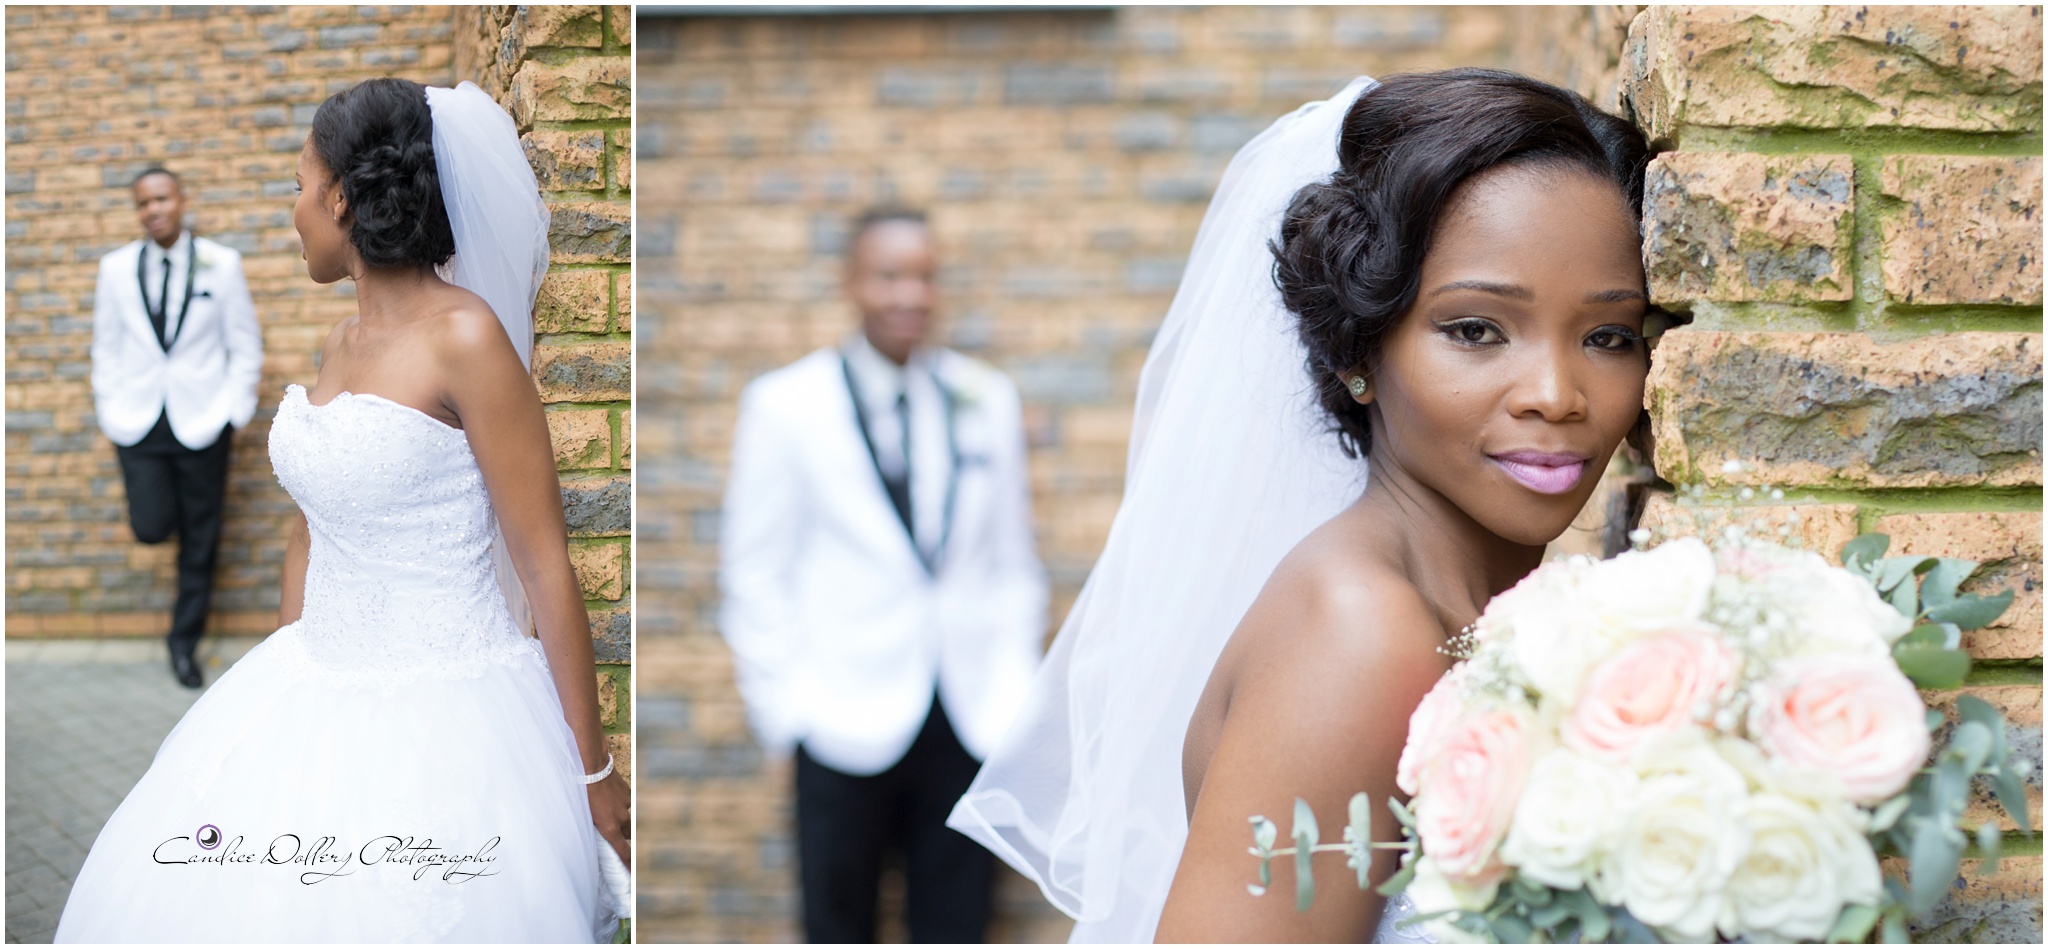 Asanda & Bonga's Wedding - Candice Dollery Photography_8231